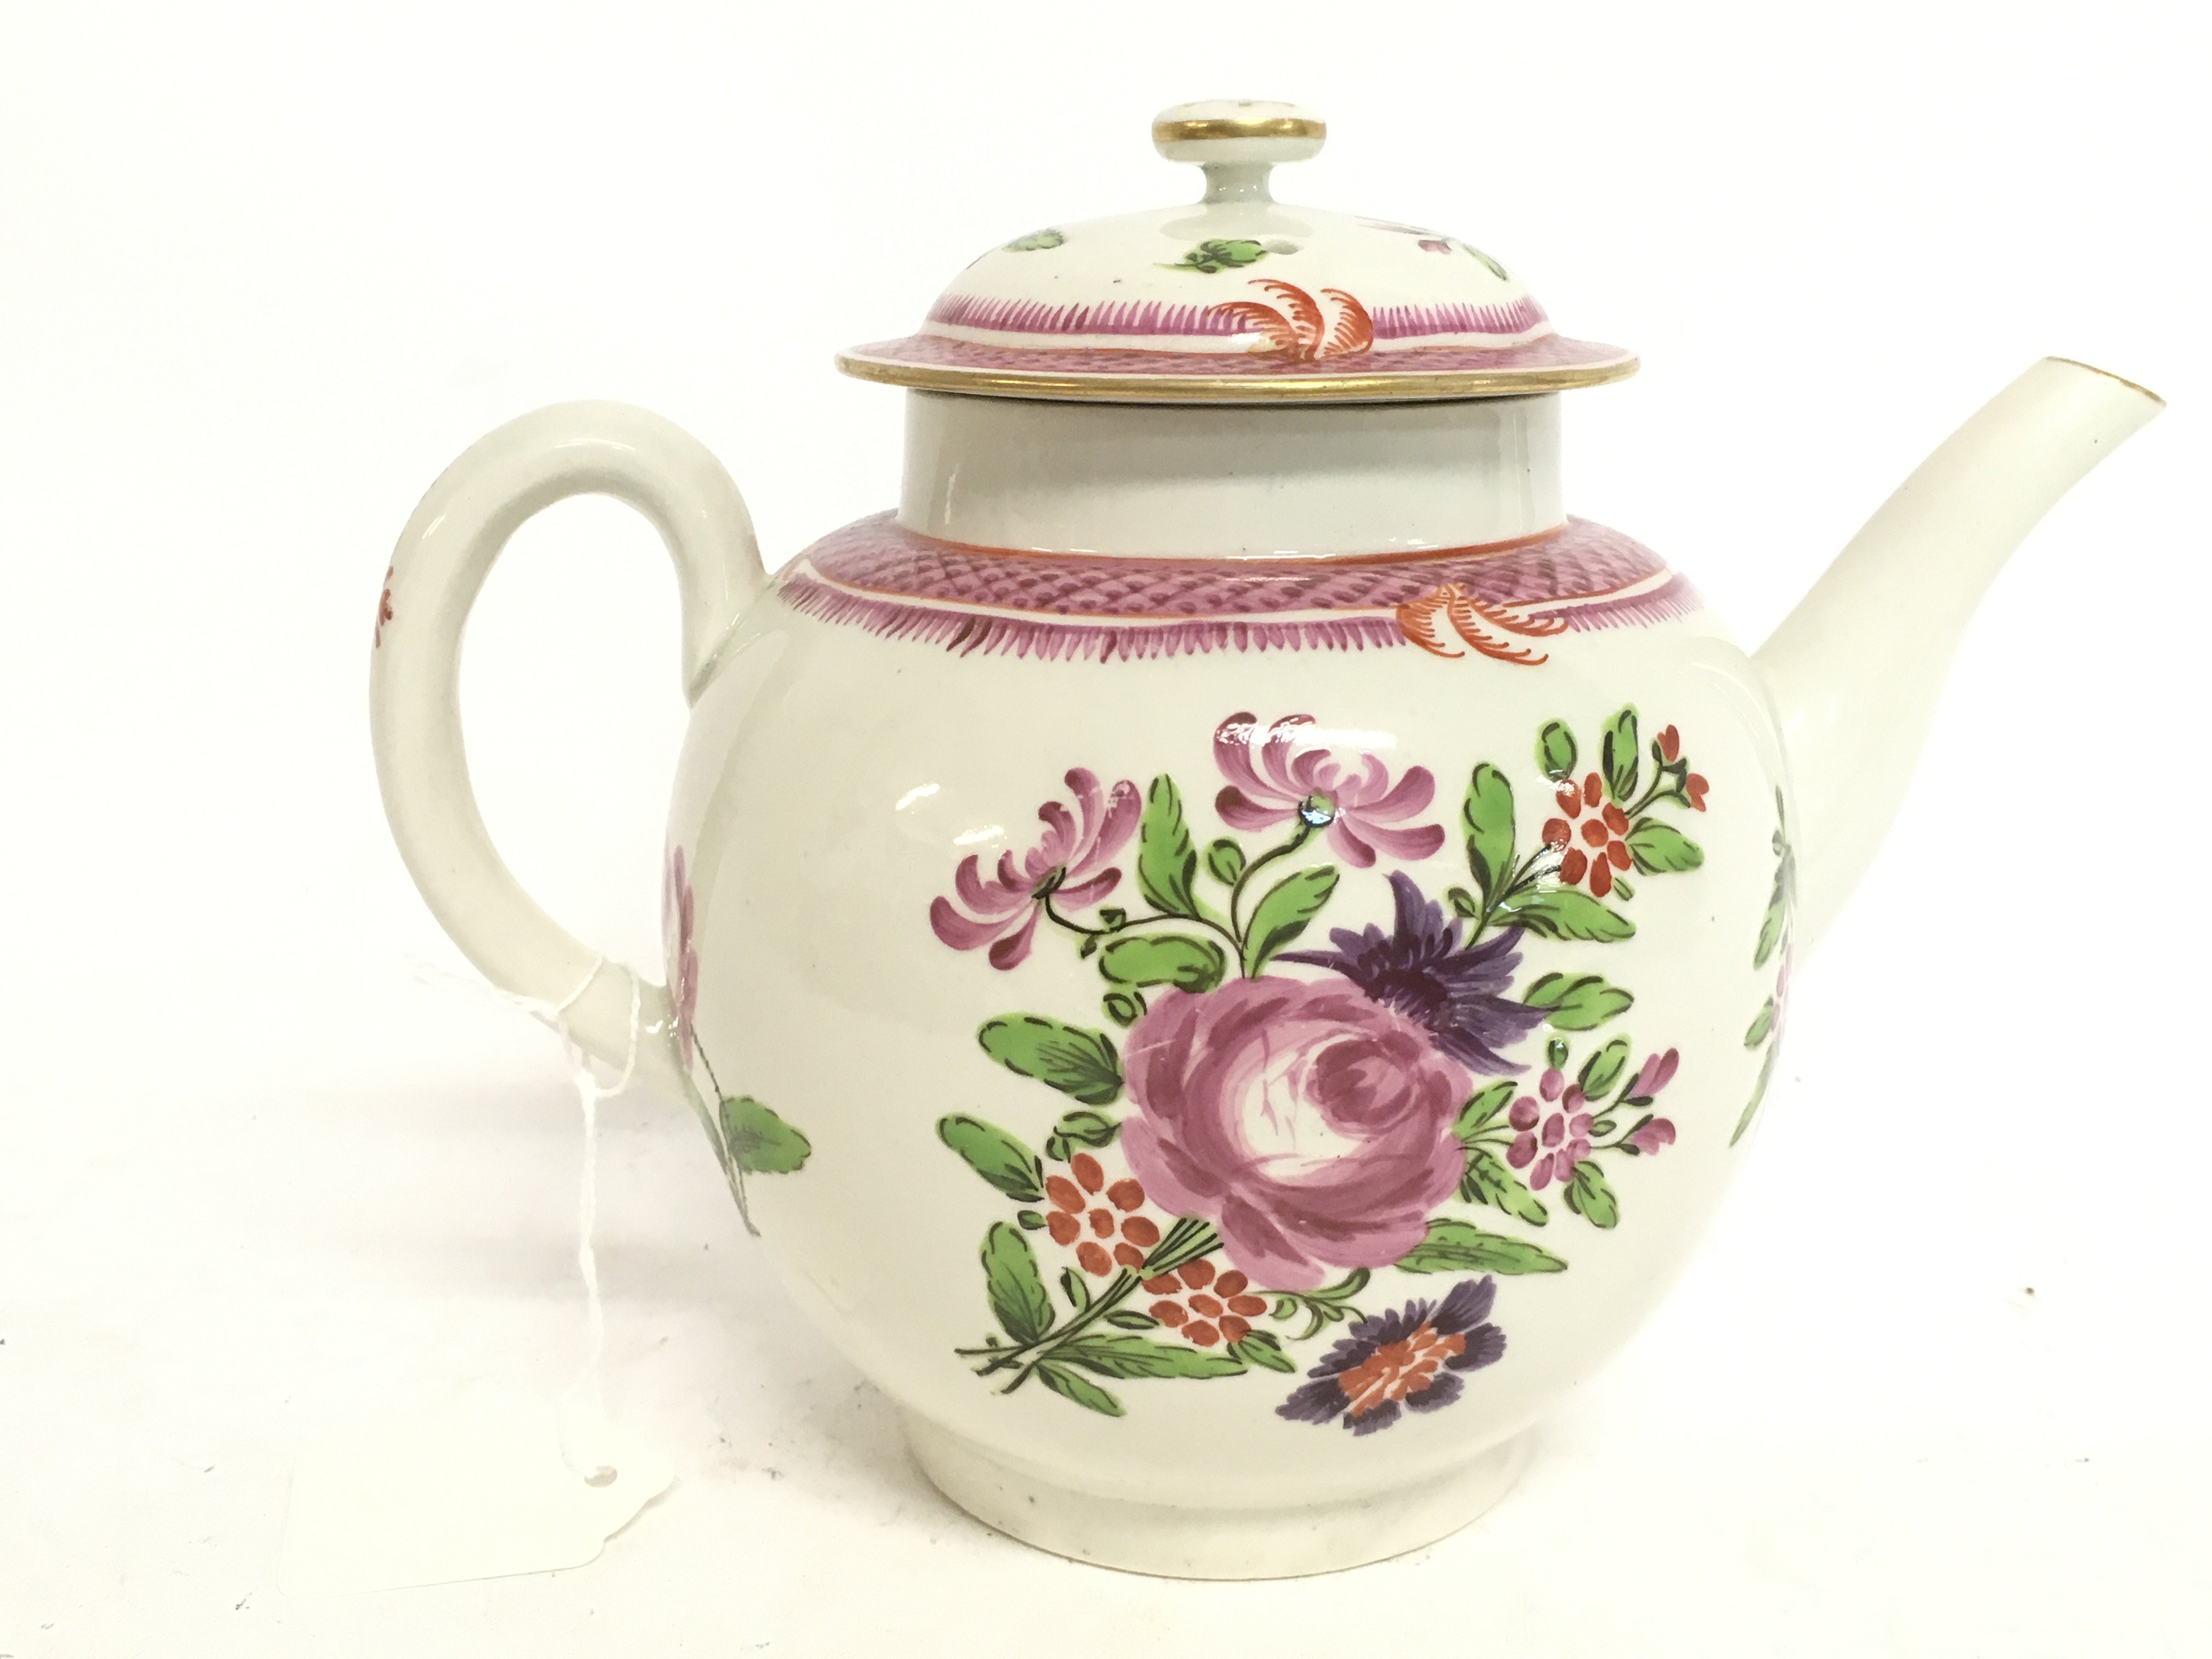 A Caughley Tea pot 1780. No obvious damage or rest